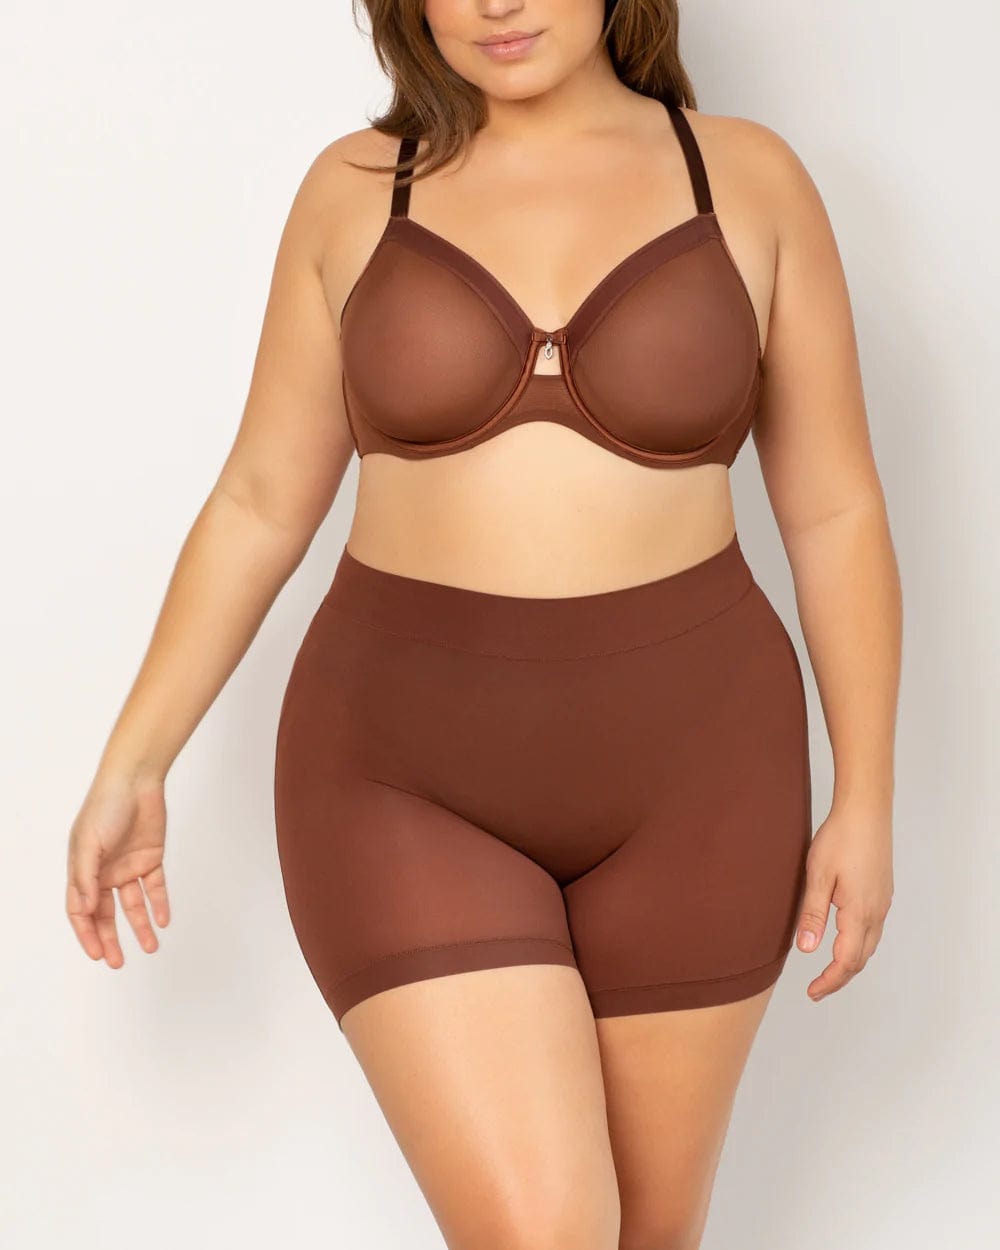 Curvy Couture Underwear Slip Short - Chocolate Nude